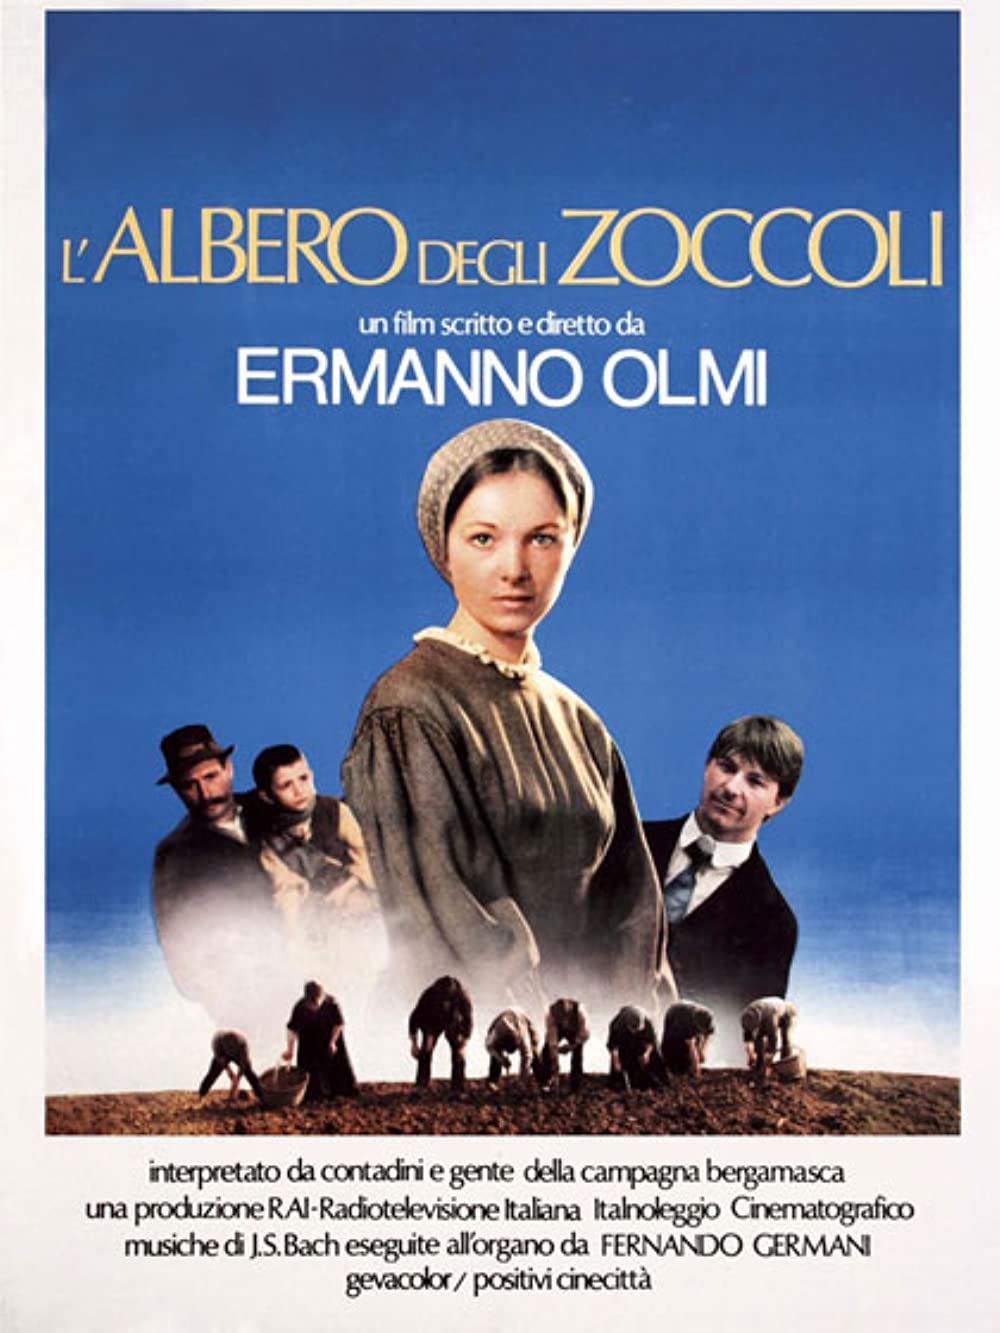 Filmbeschreibung zu Lalbero degli zoccoli